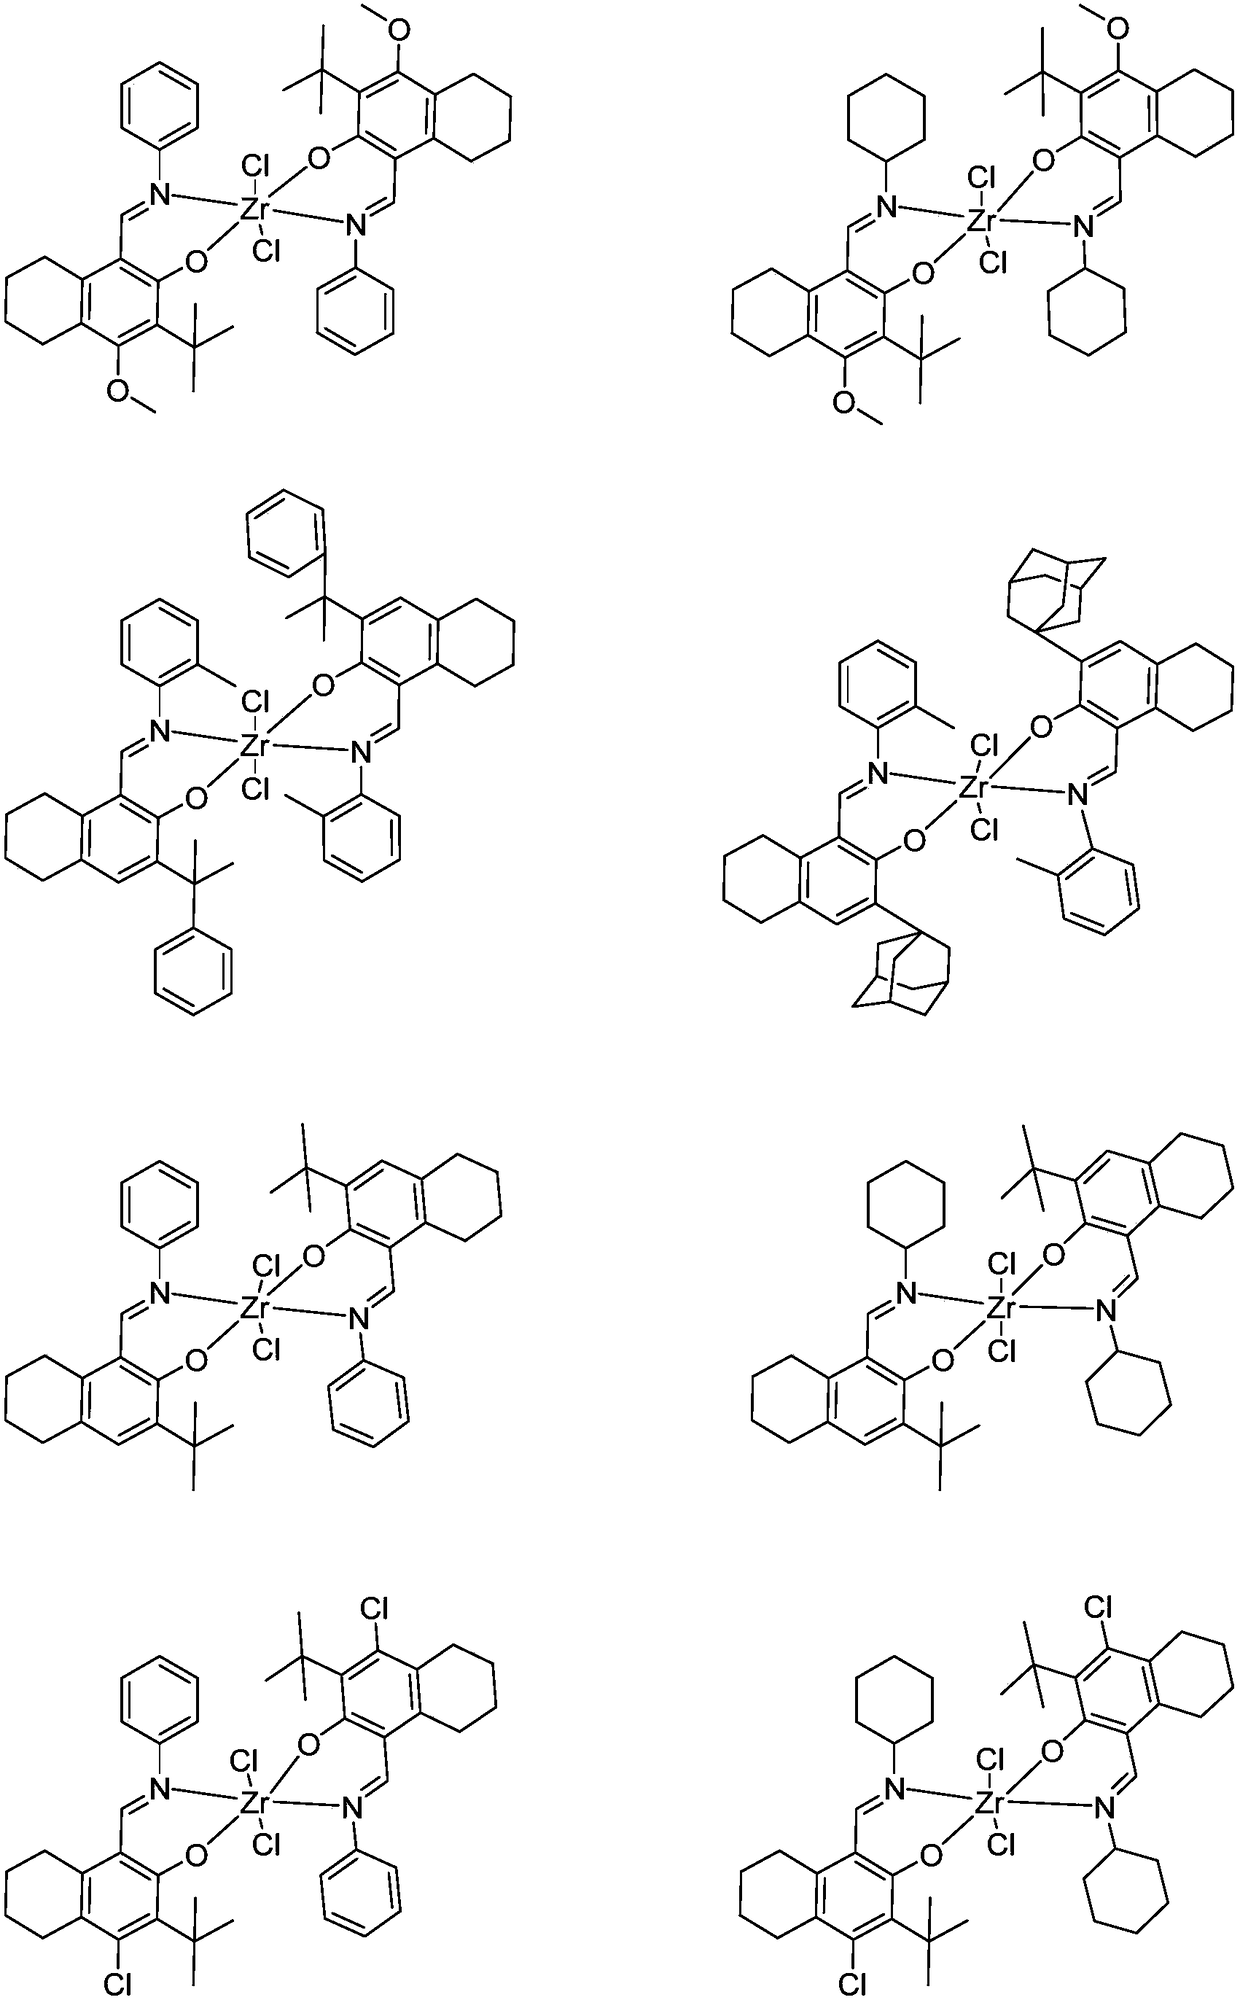 Zirconium tetralylmethoxyl imine complex and preparation method and application thereof